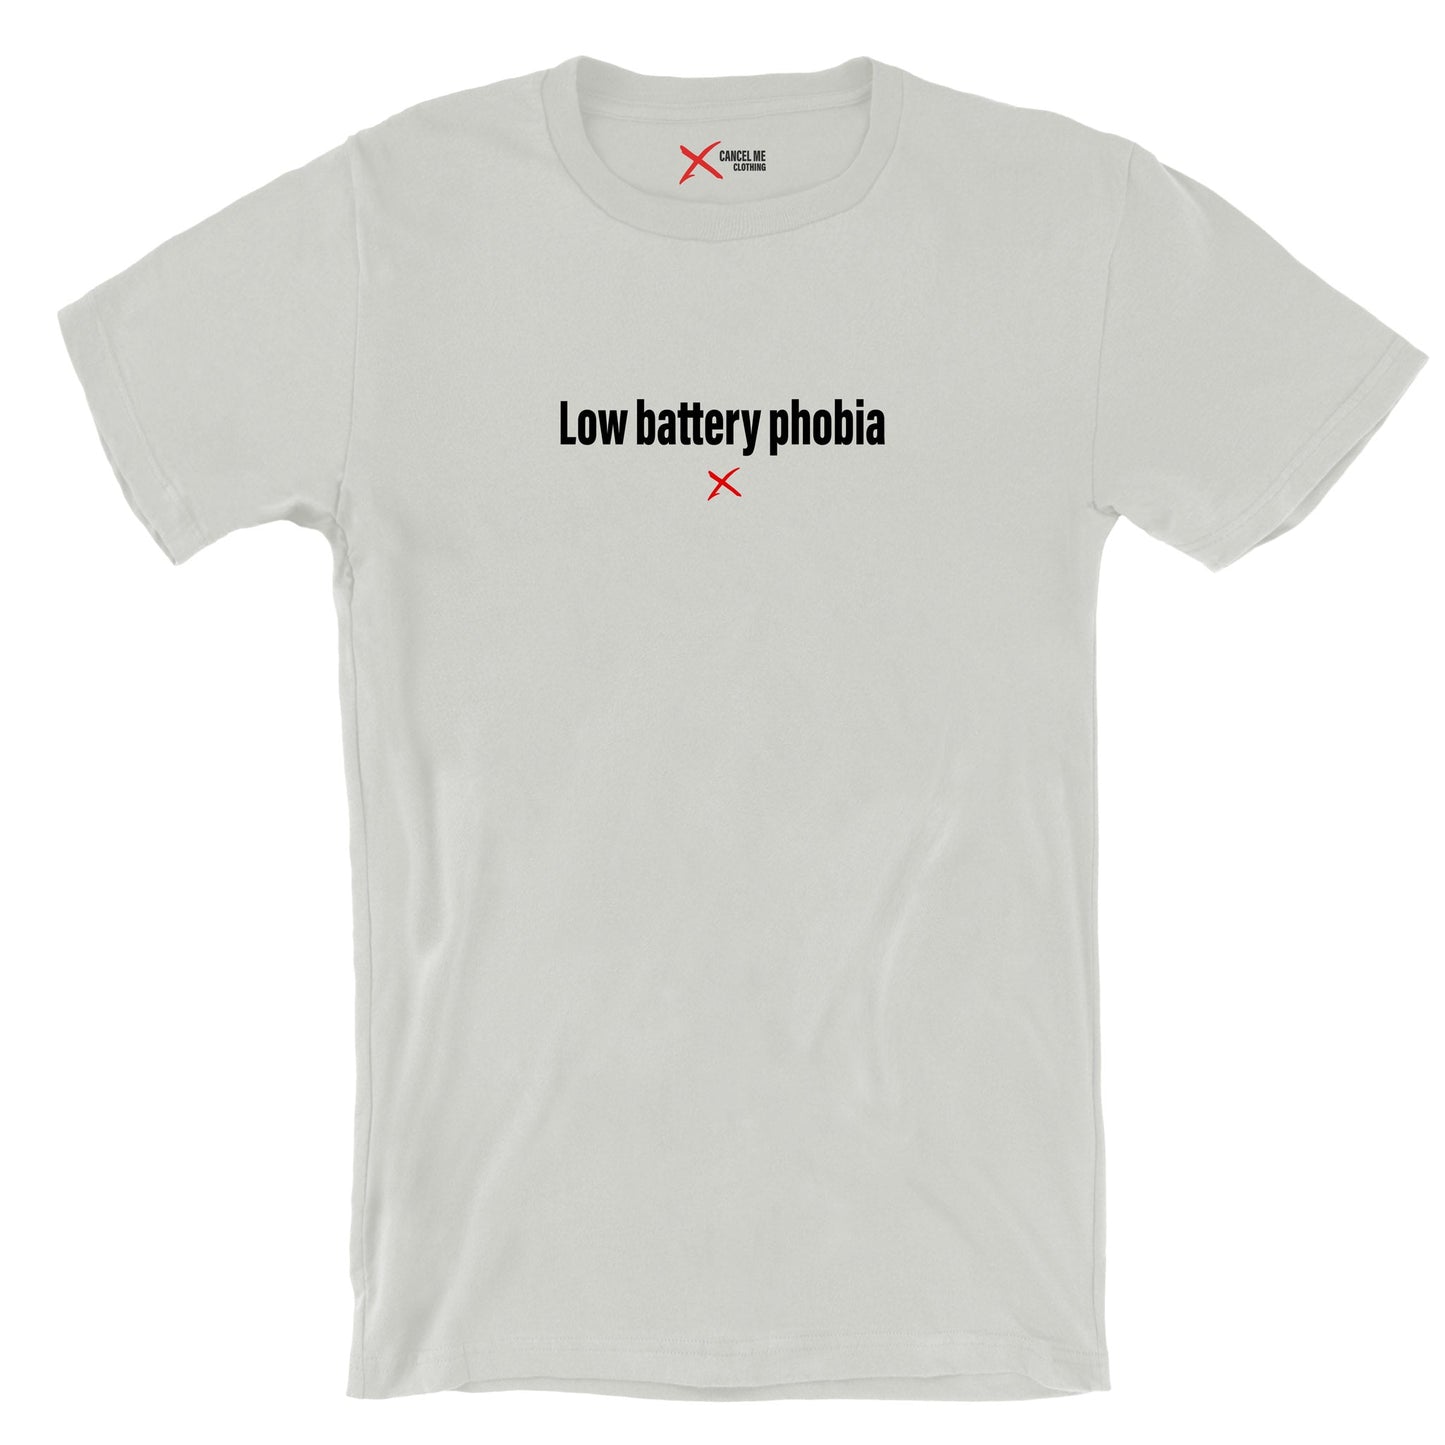 Low battery phobia - Shirt